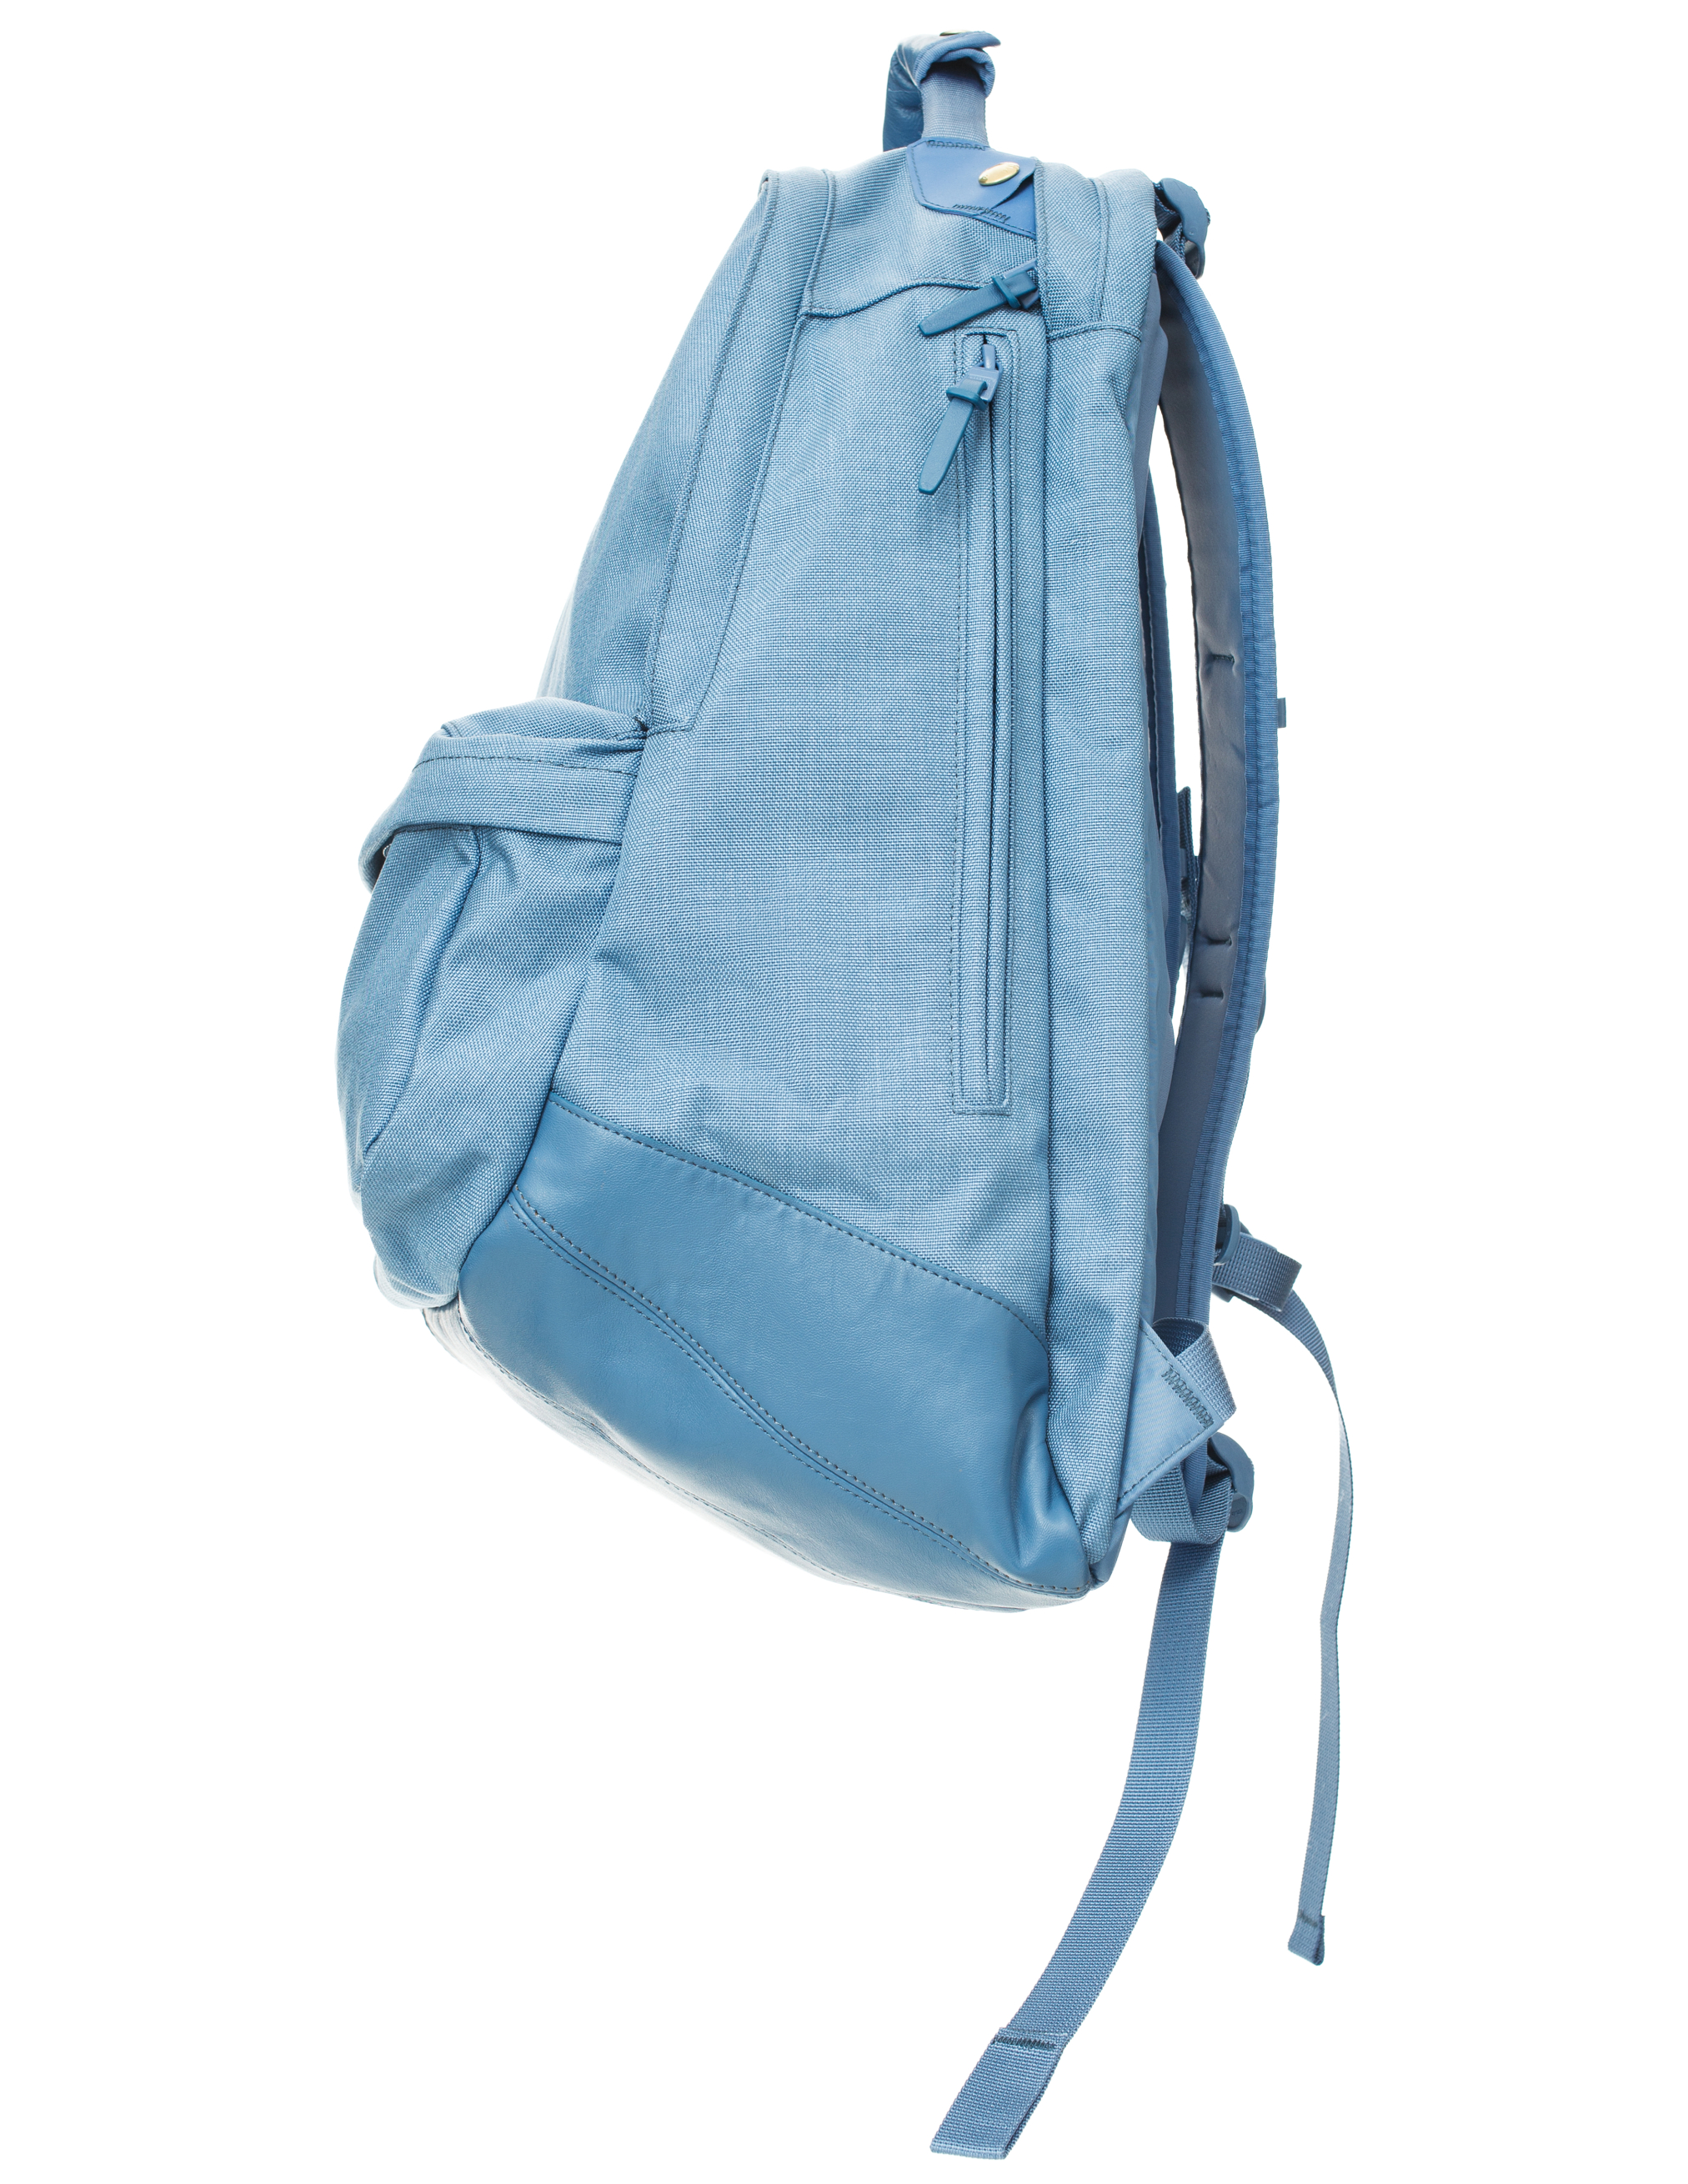 Синий рюкзак Cordura 22L visvim 0123103003032/BLUE, размер One Size 0123103003032/BLUE - фото 2